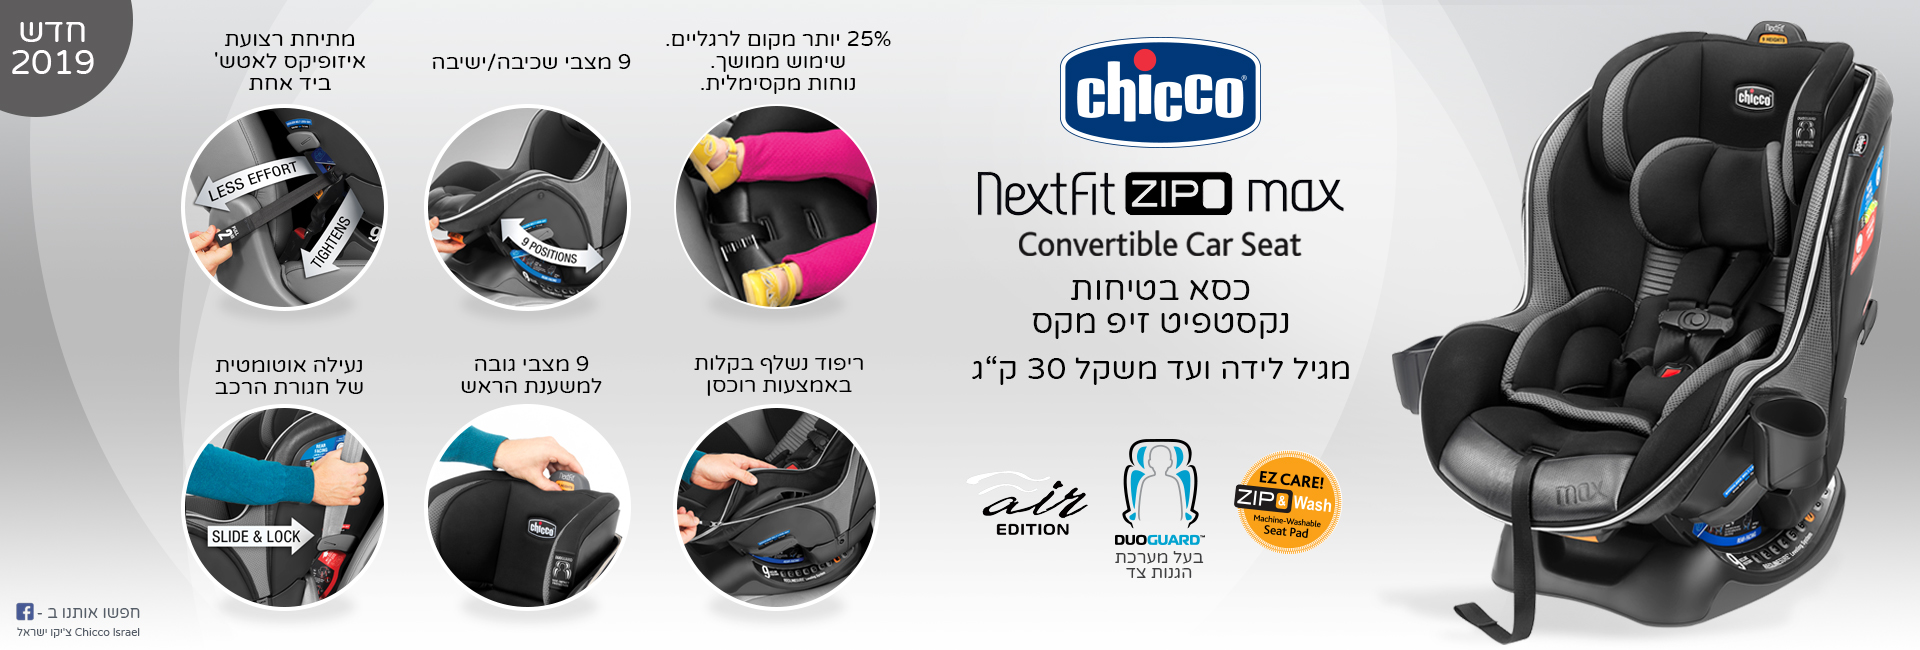 Chicco - NextFit Zip Max